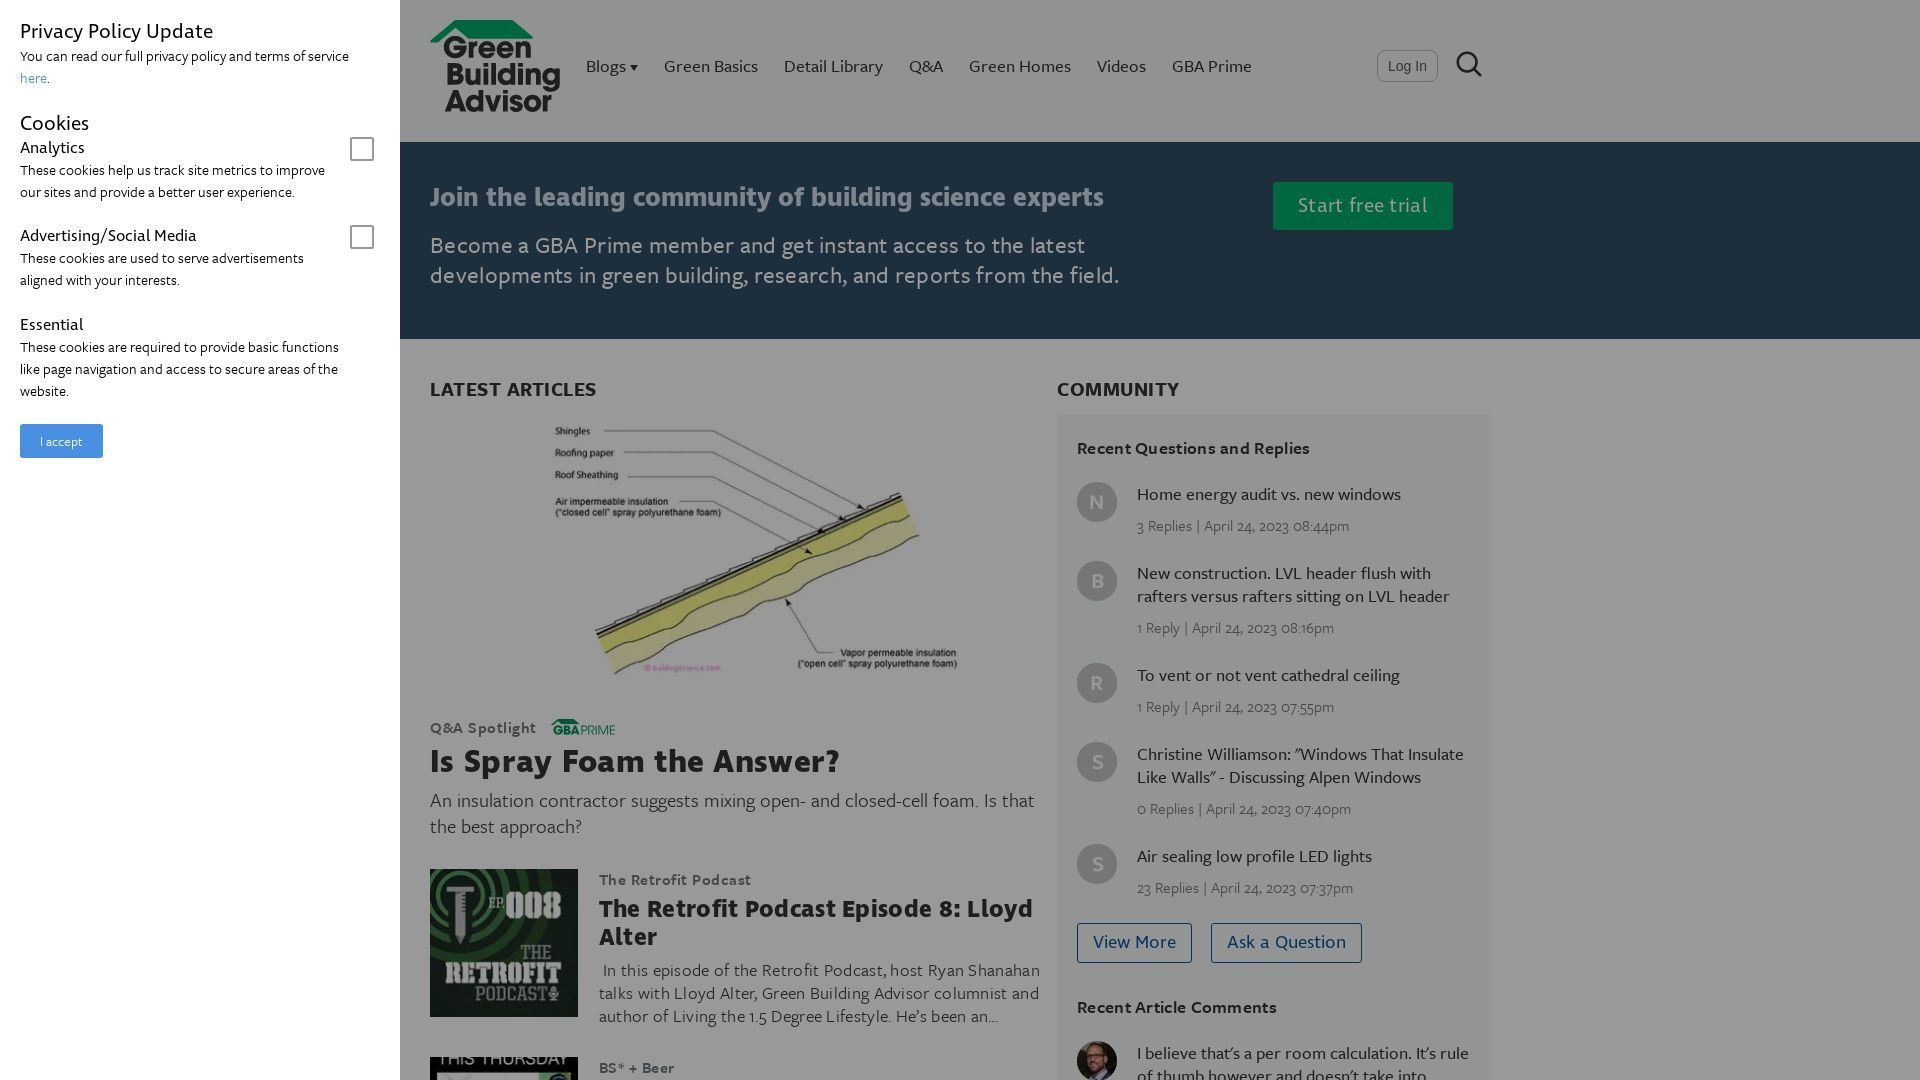 Website status greenbuildingadvisor.com is   ONLINE